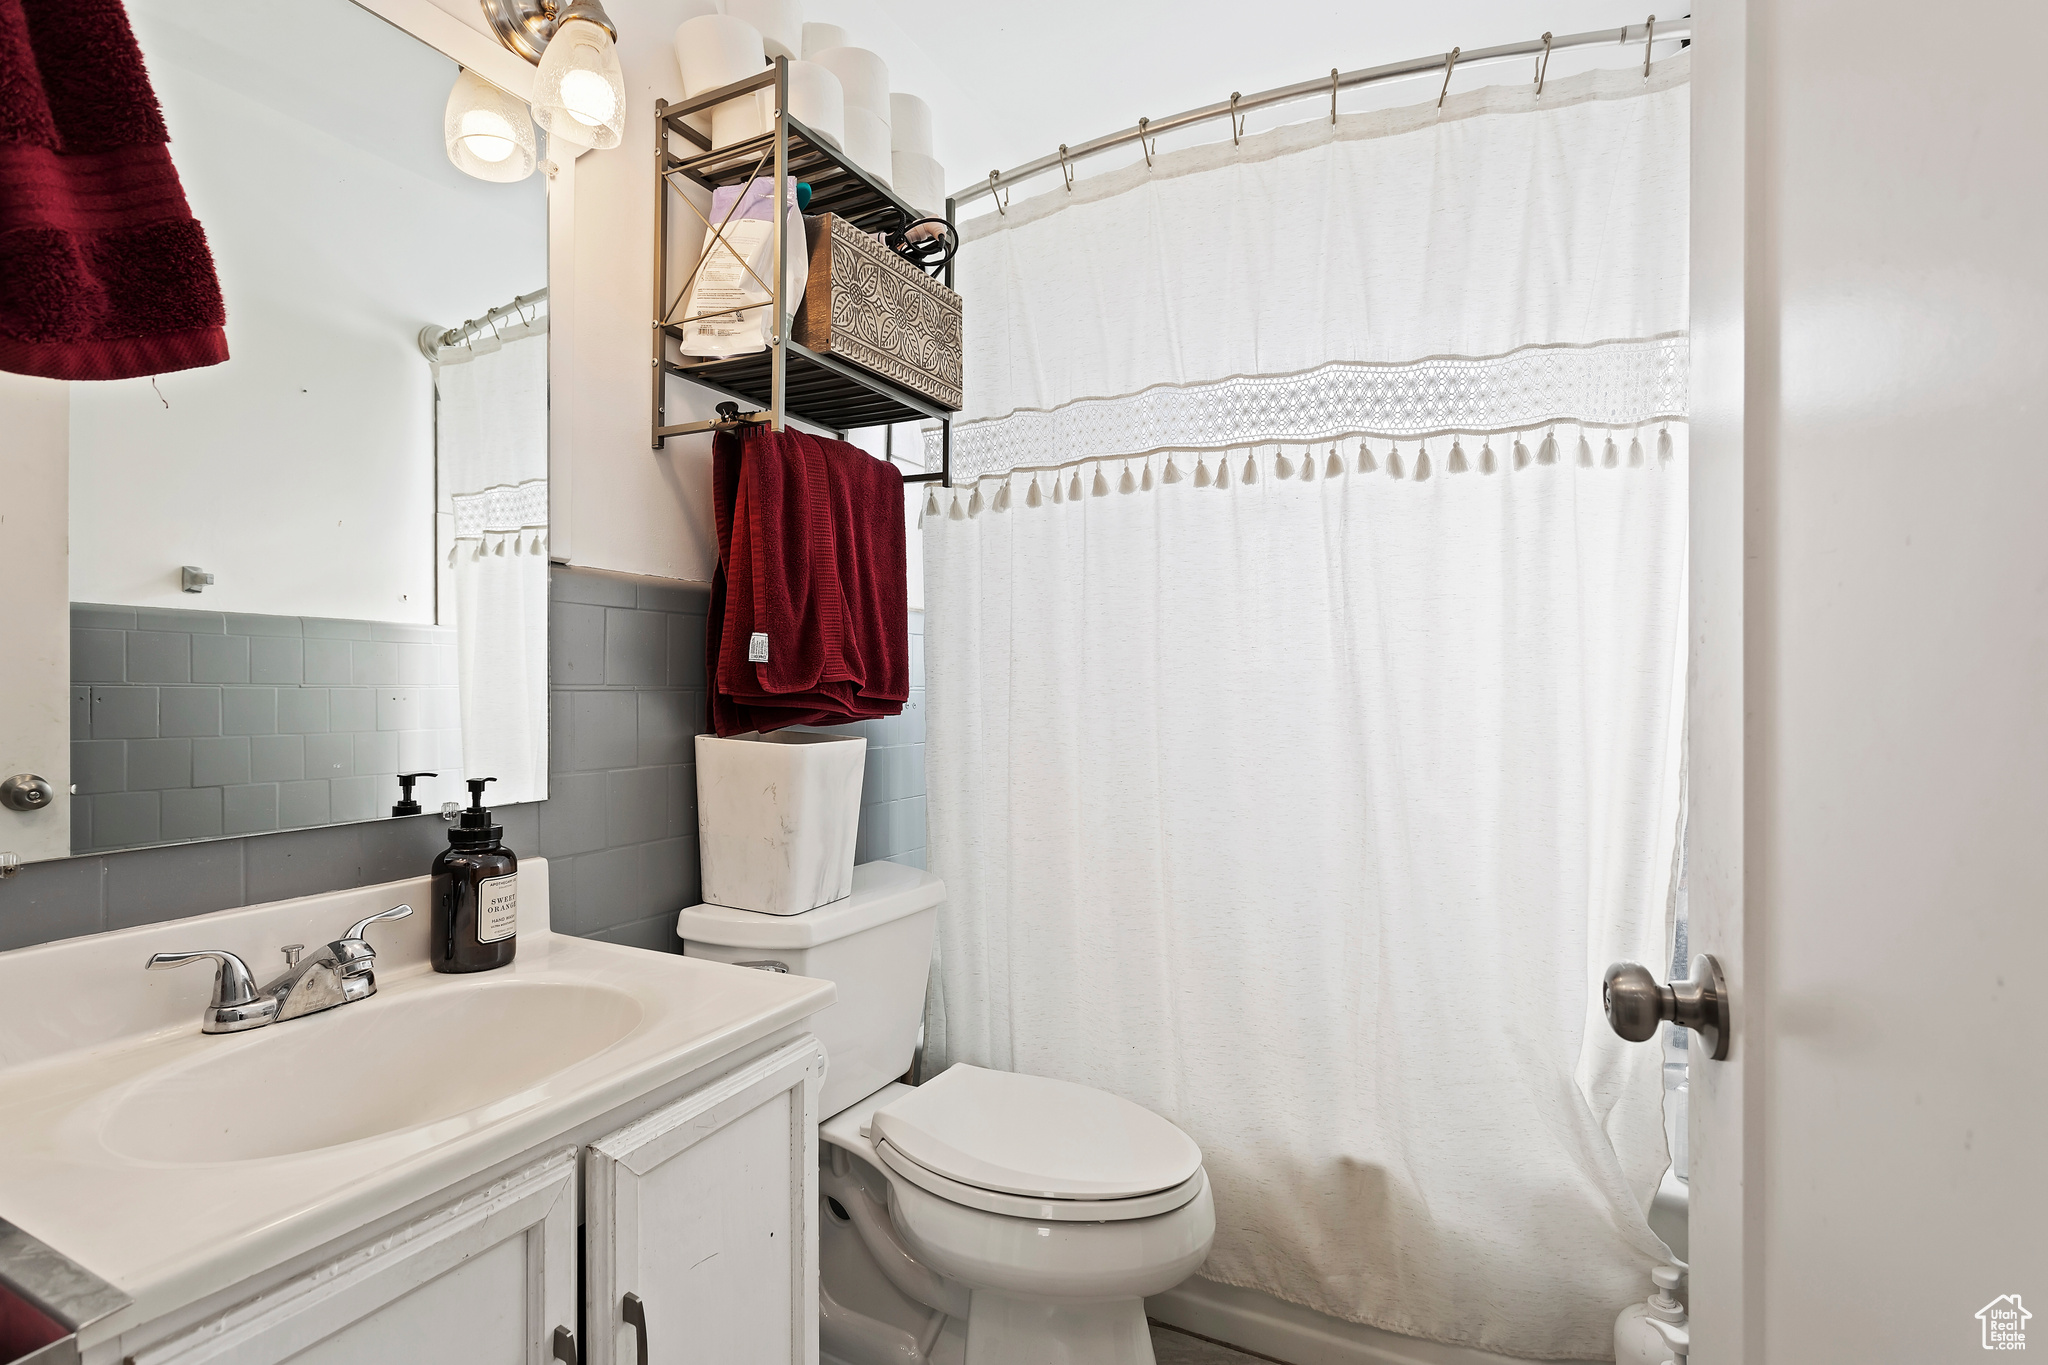 Bathroom with oversized vanity, tile walls, and toilet